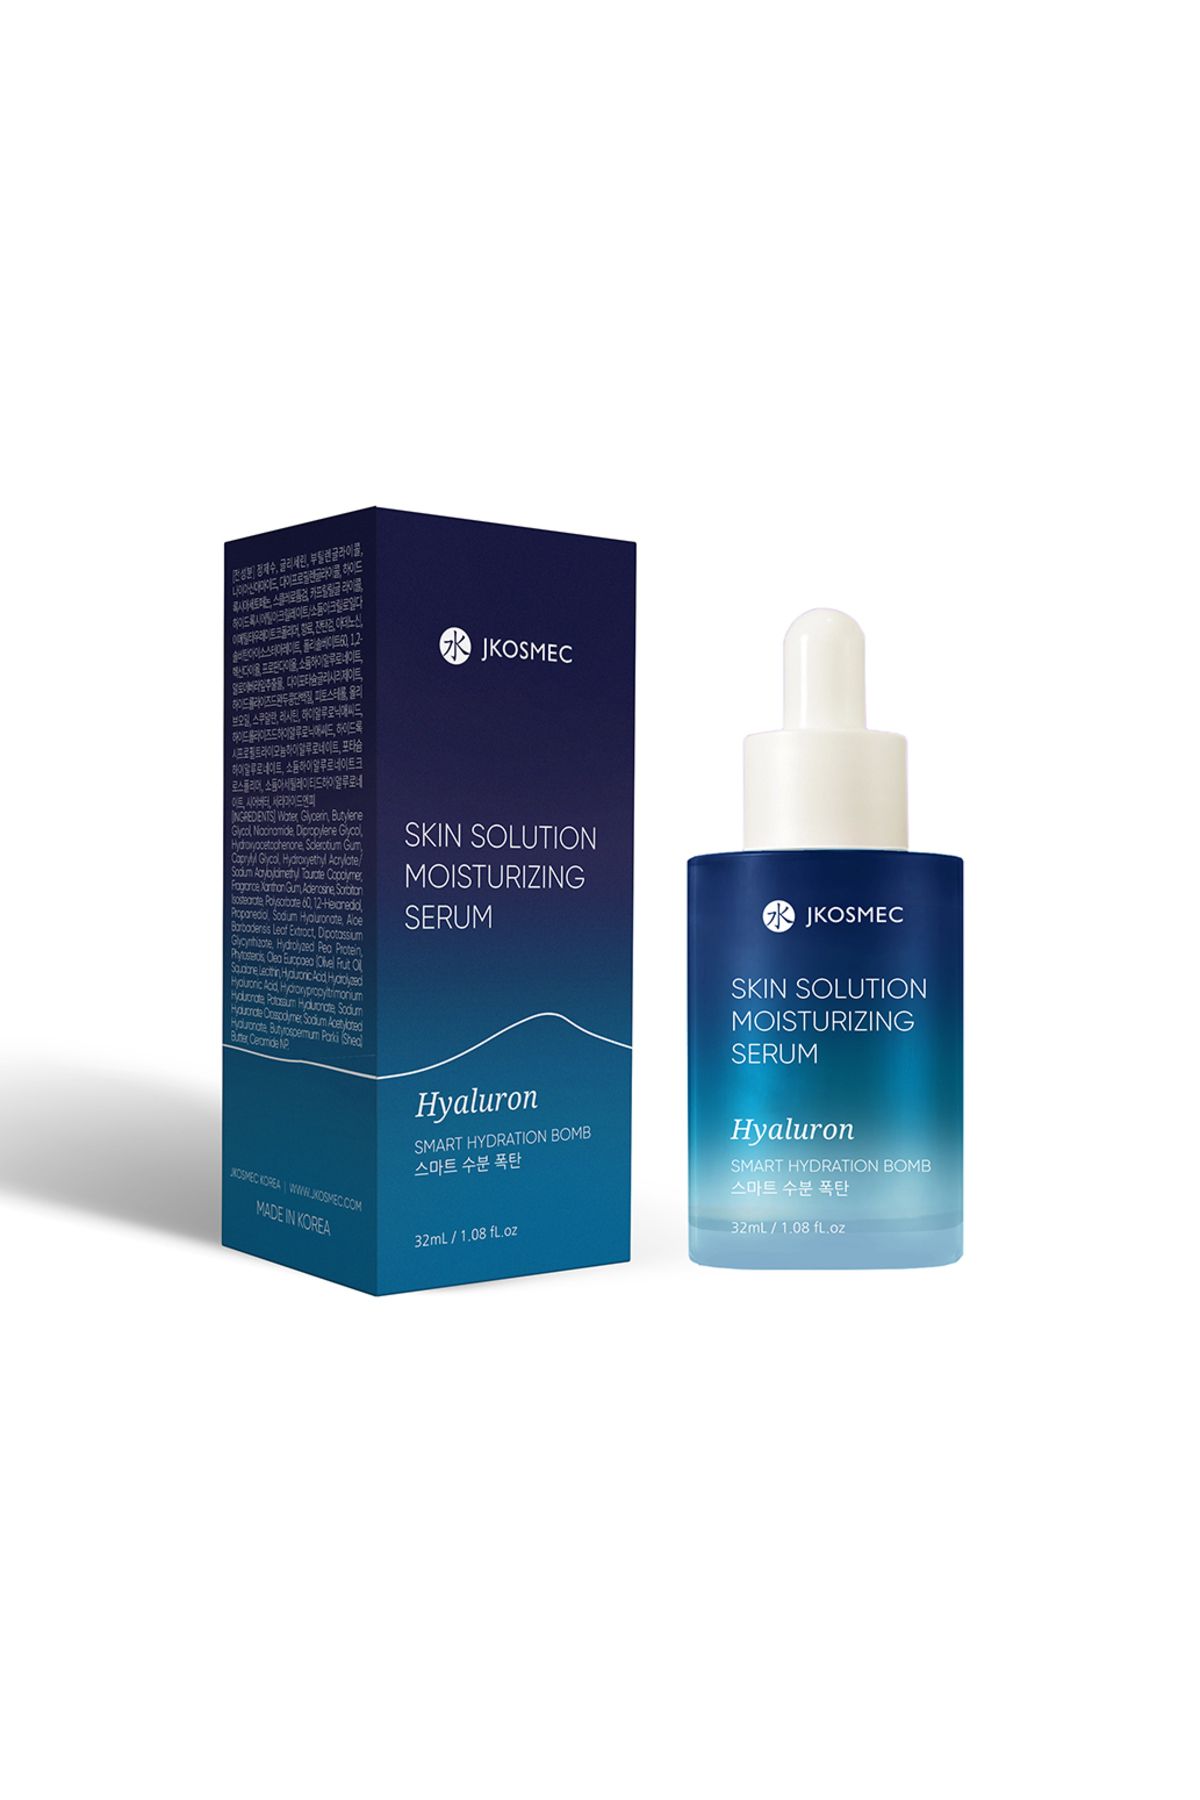 JKosmec Skin Solution Moisturizing Serum Hyaluron